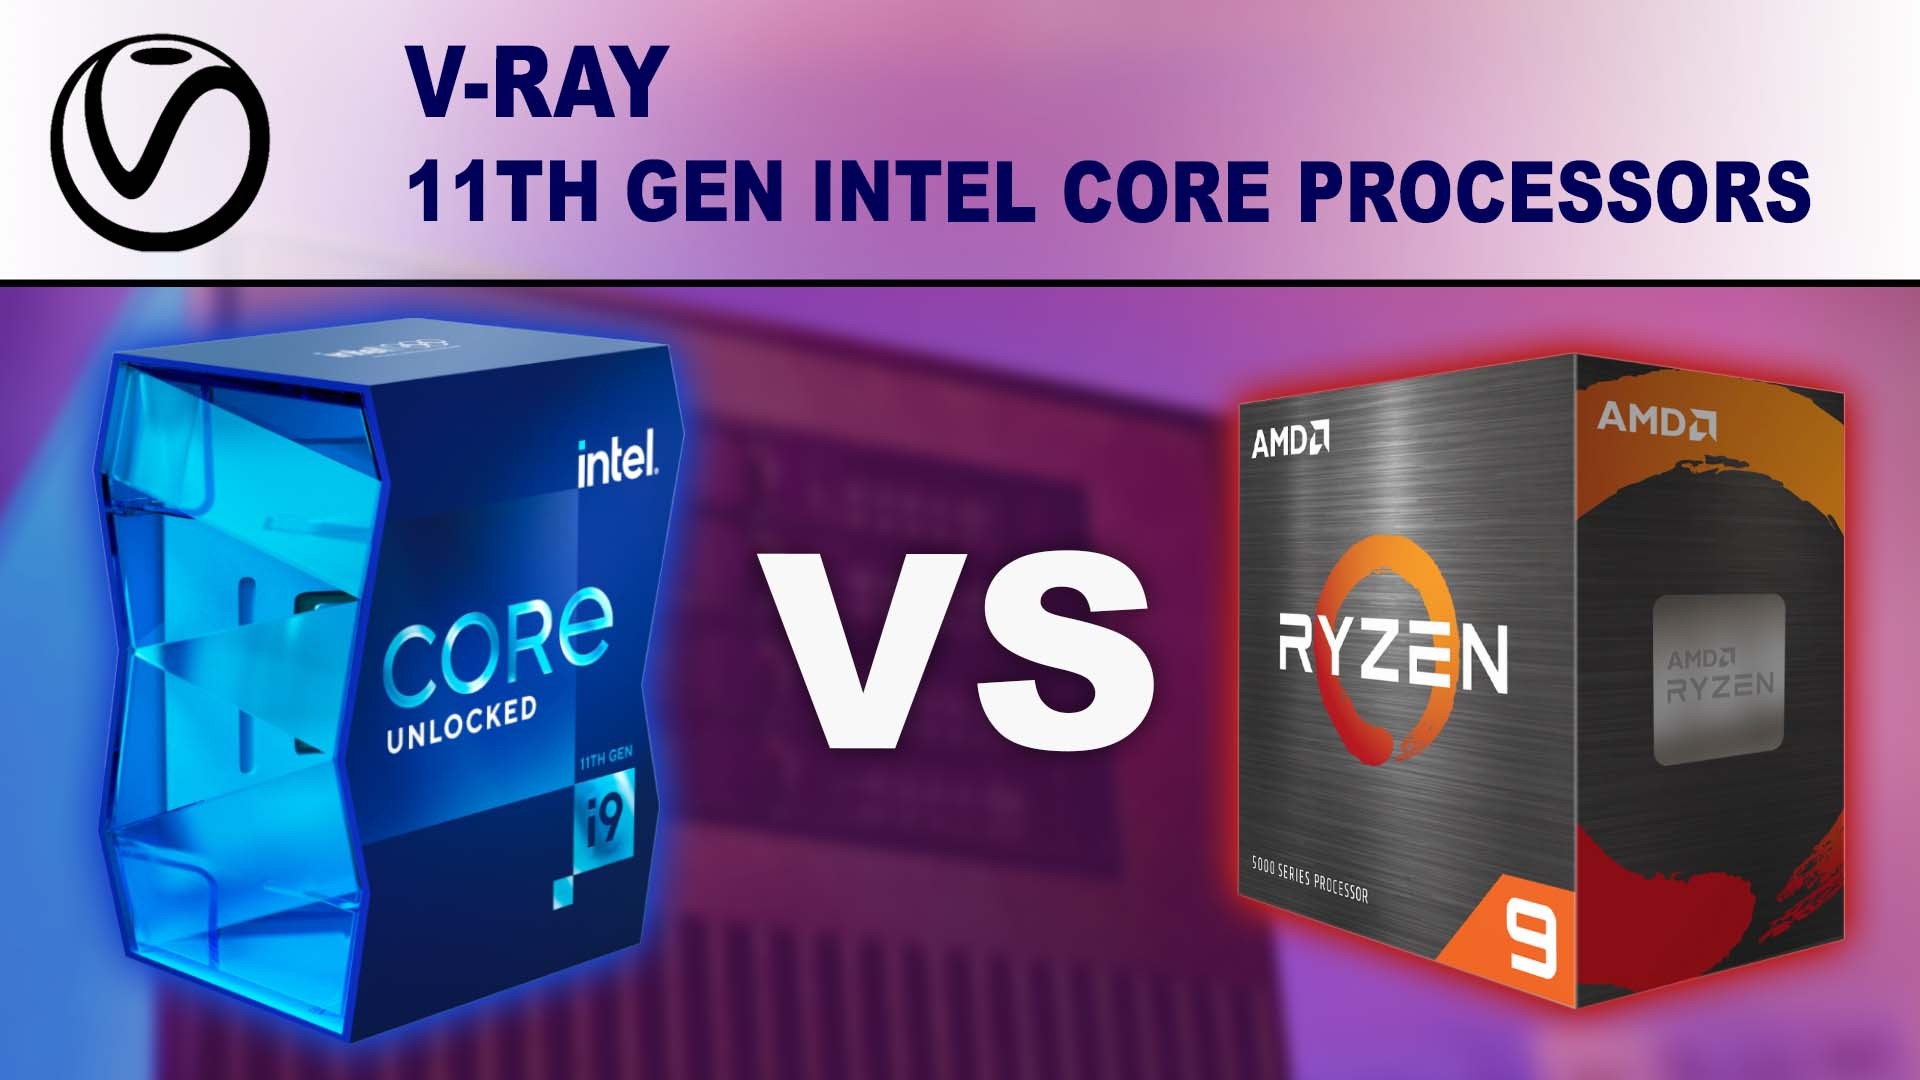 11th Gen Intel Core Processors for V-Ray